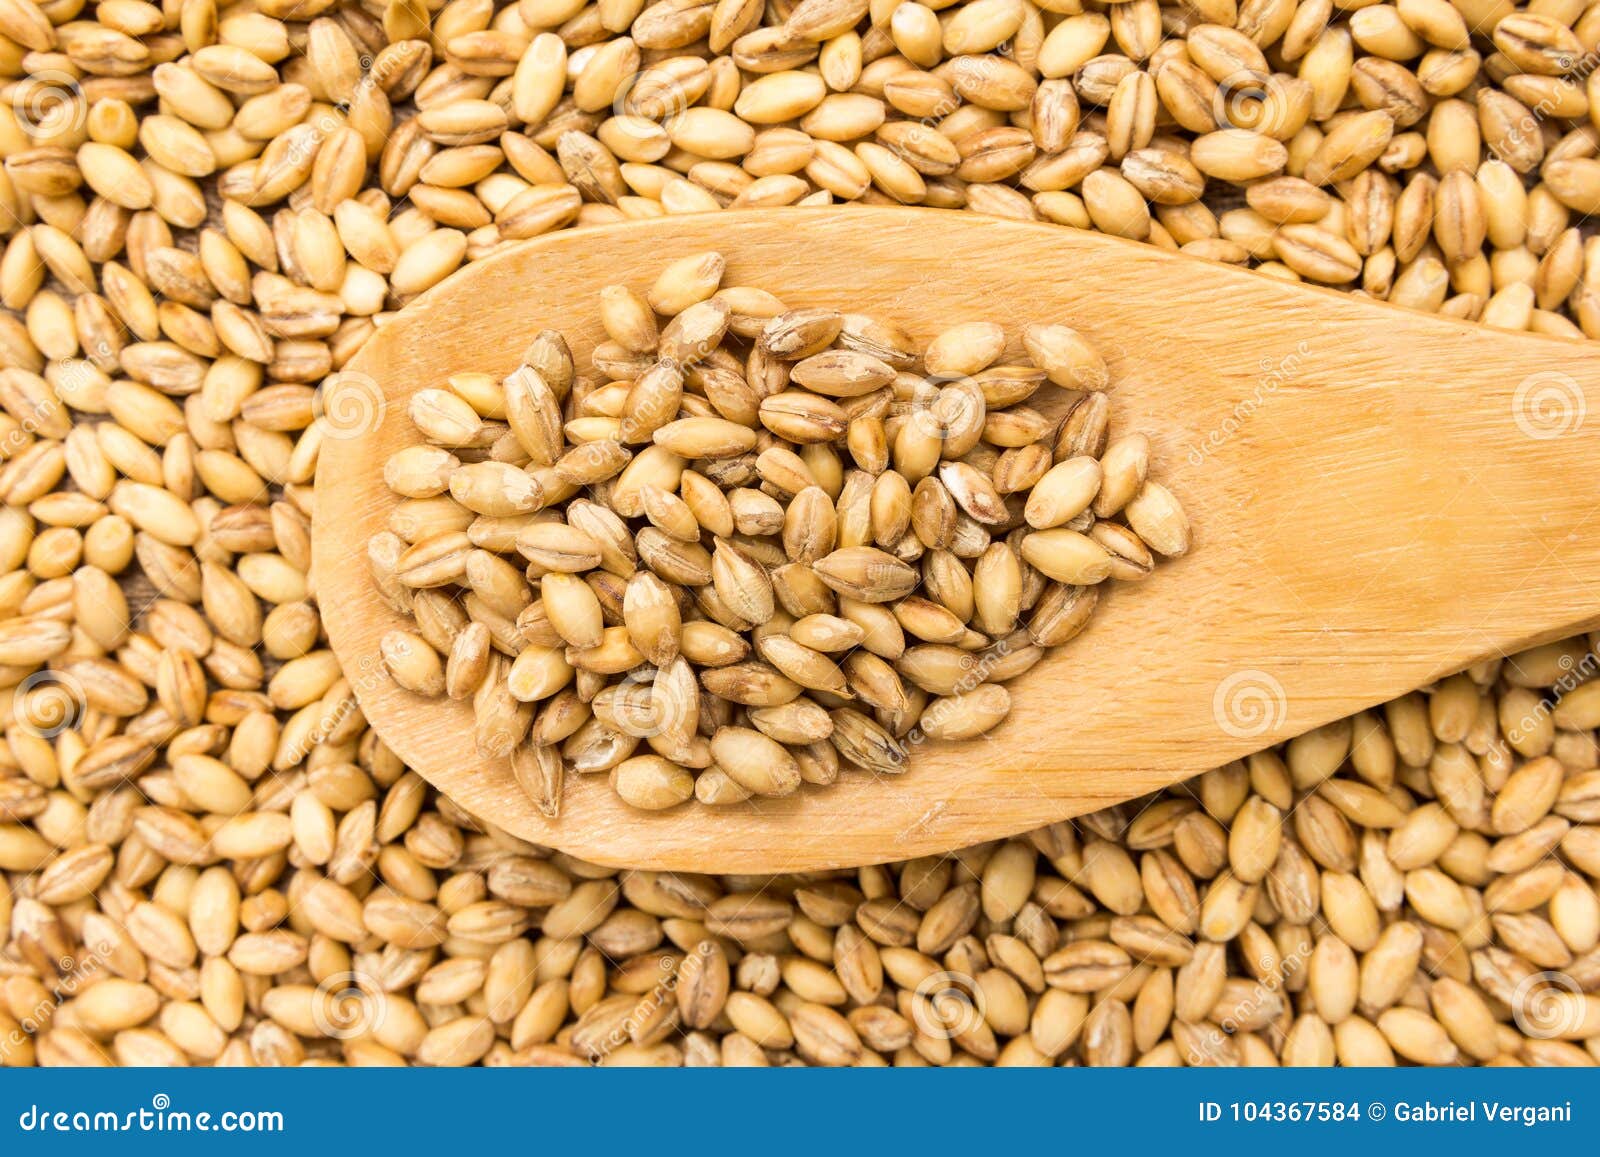 barley cereal grain. grains in wooden spoon. close up.